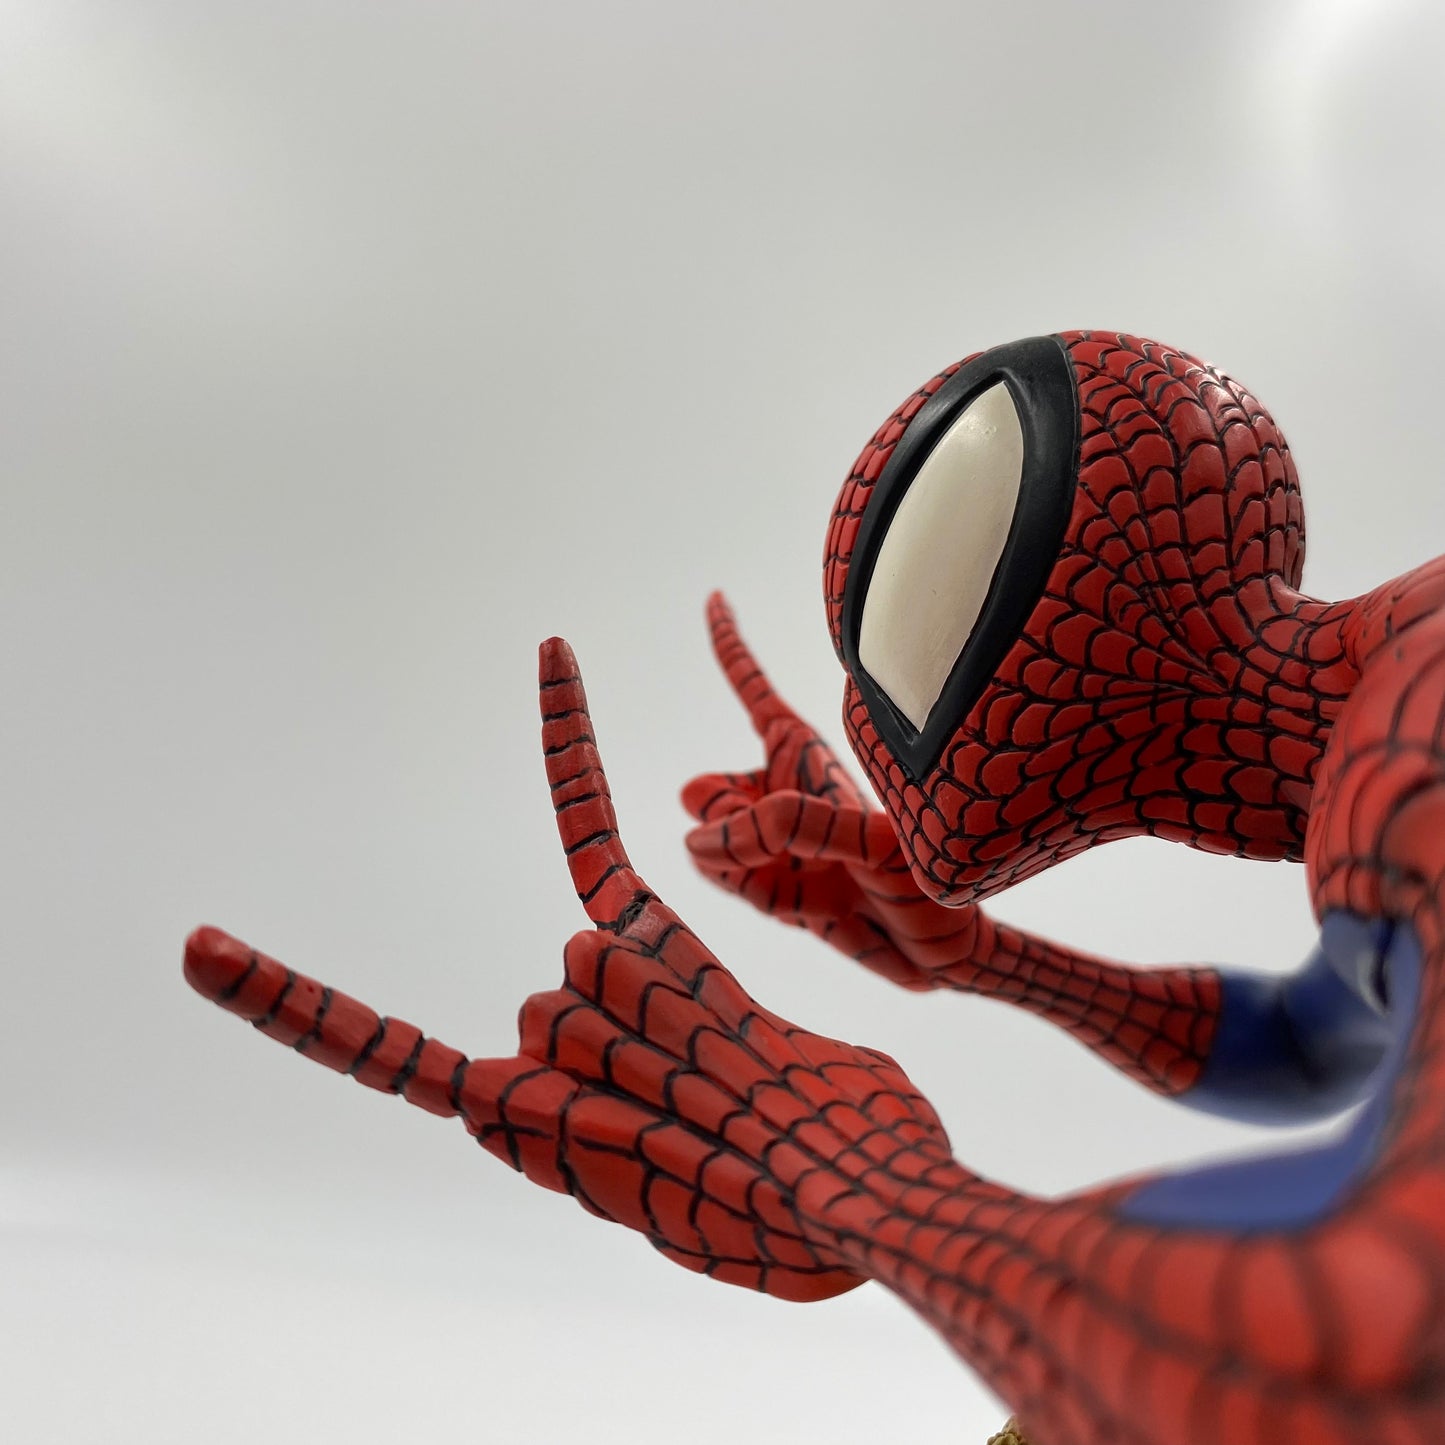 Spider-Man bust (2005) Diamond Select